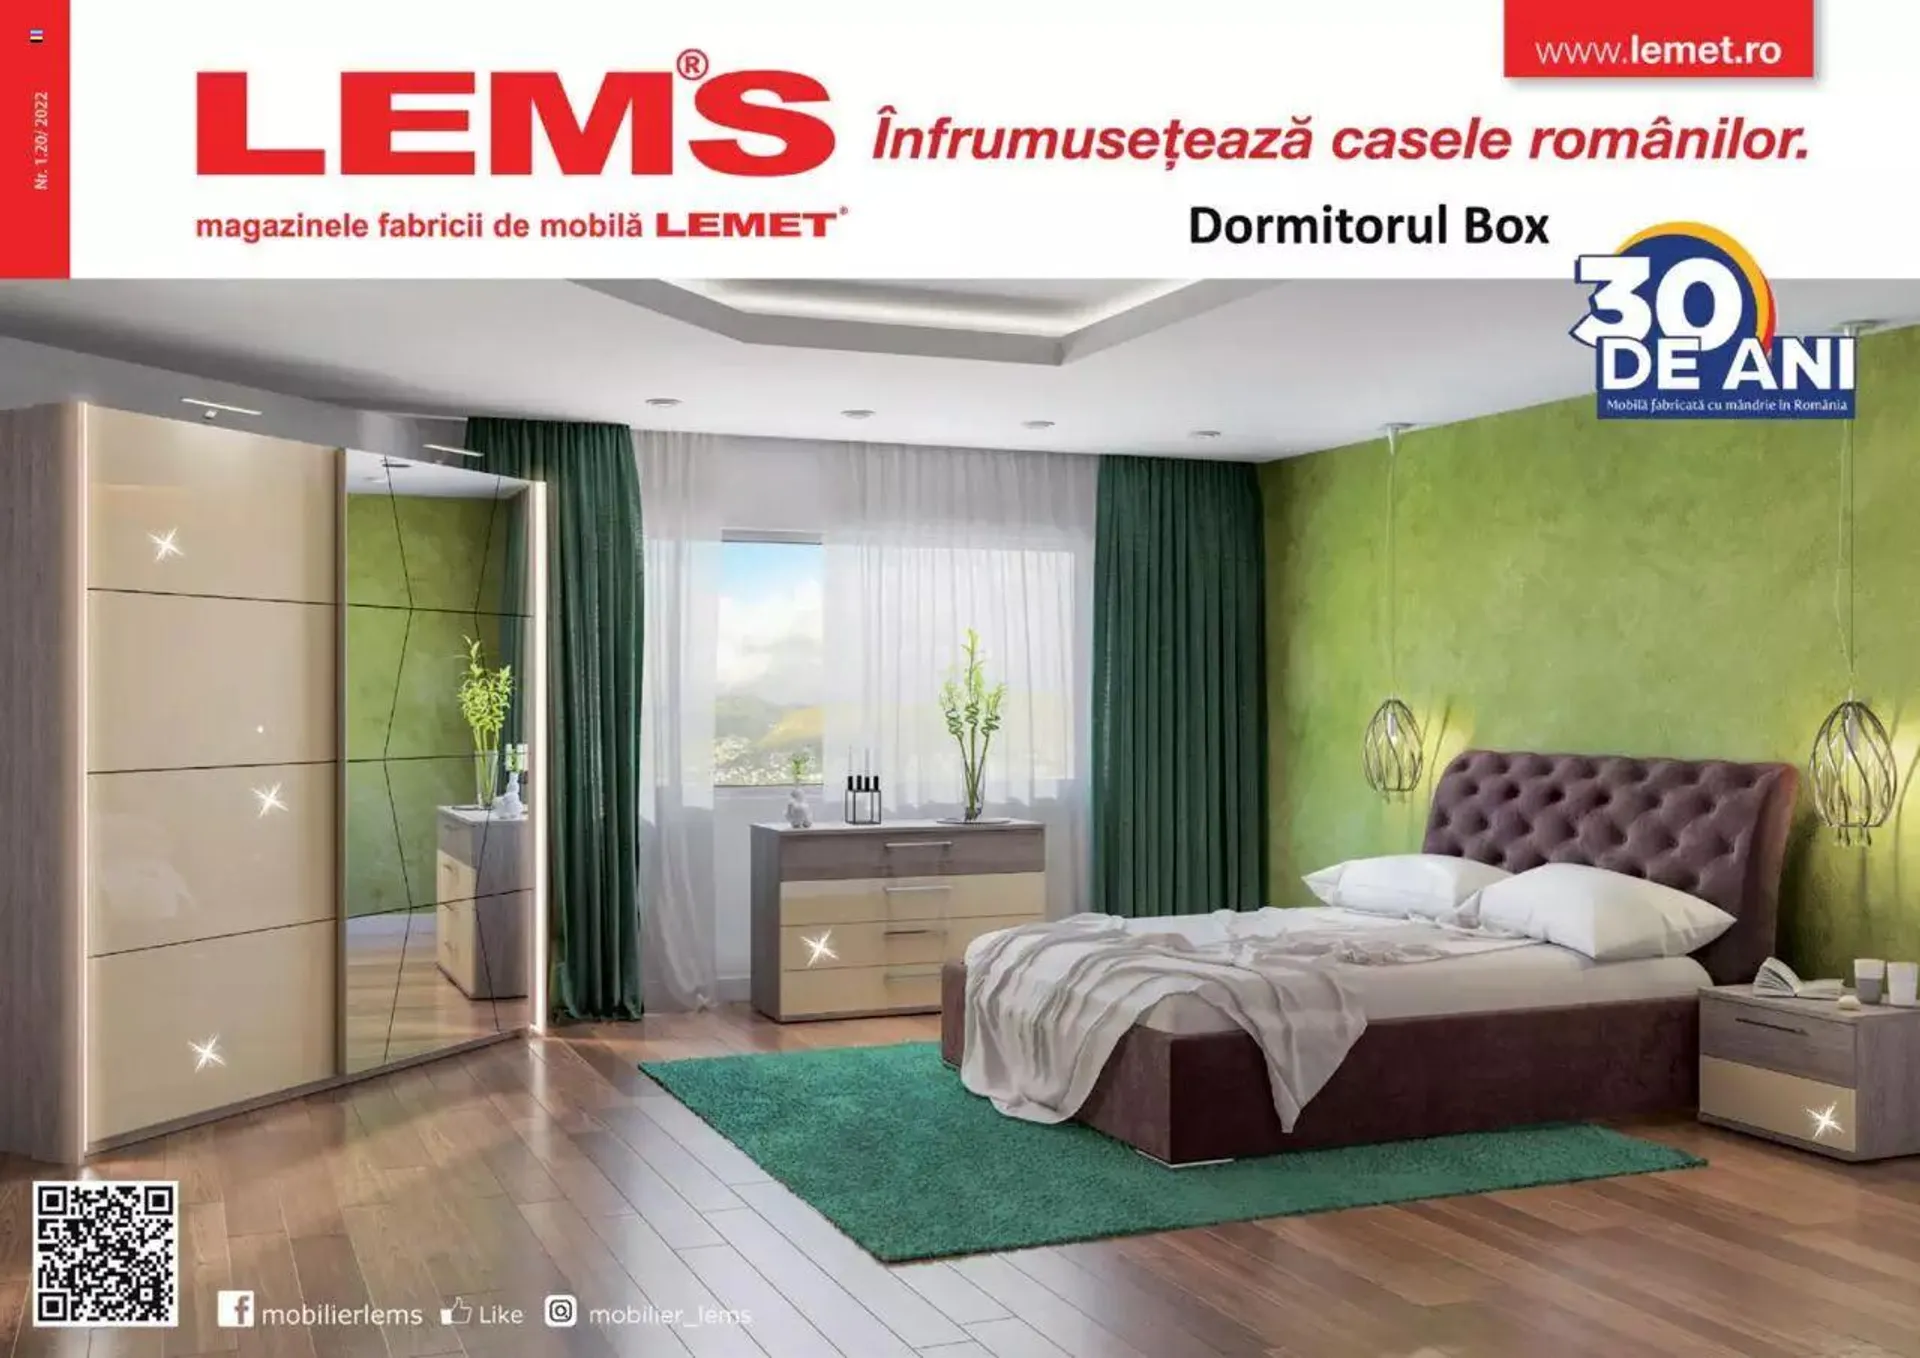 Lem’s - Dormitor Box - 0